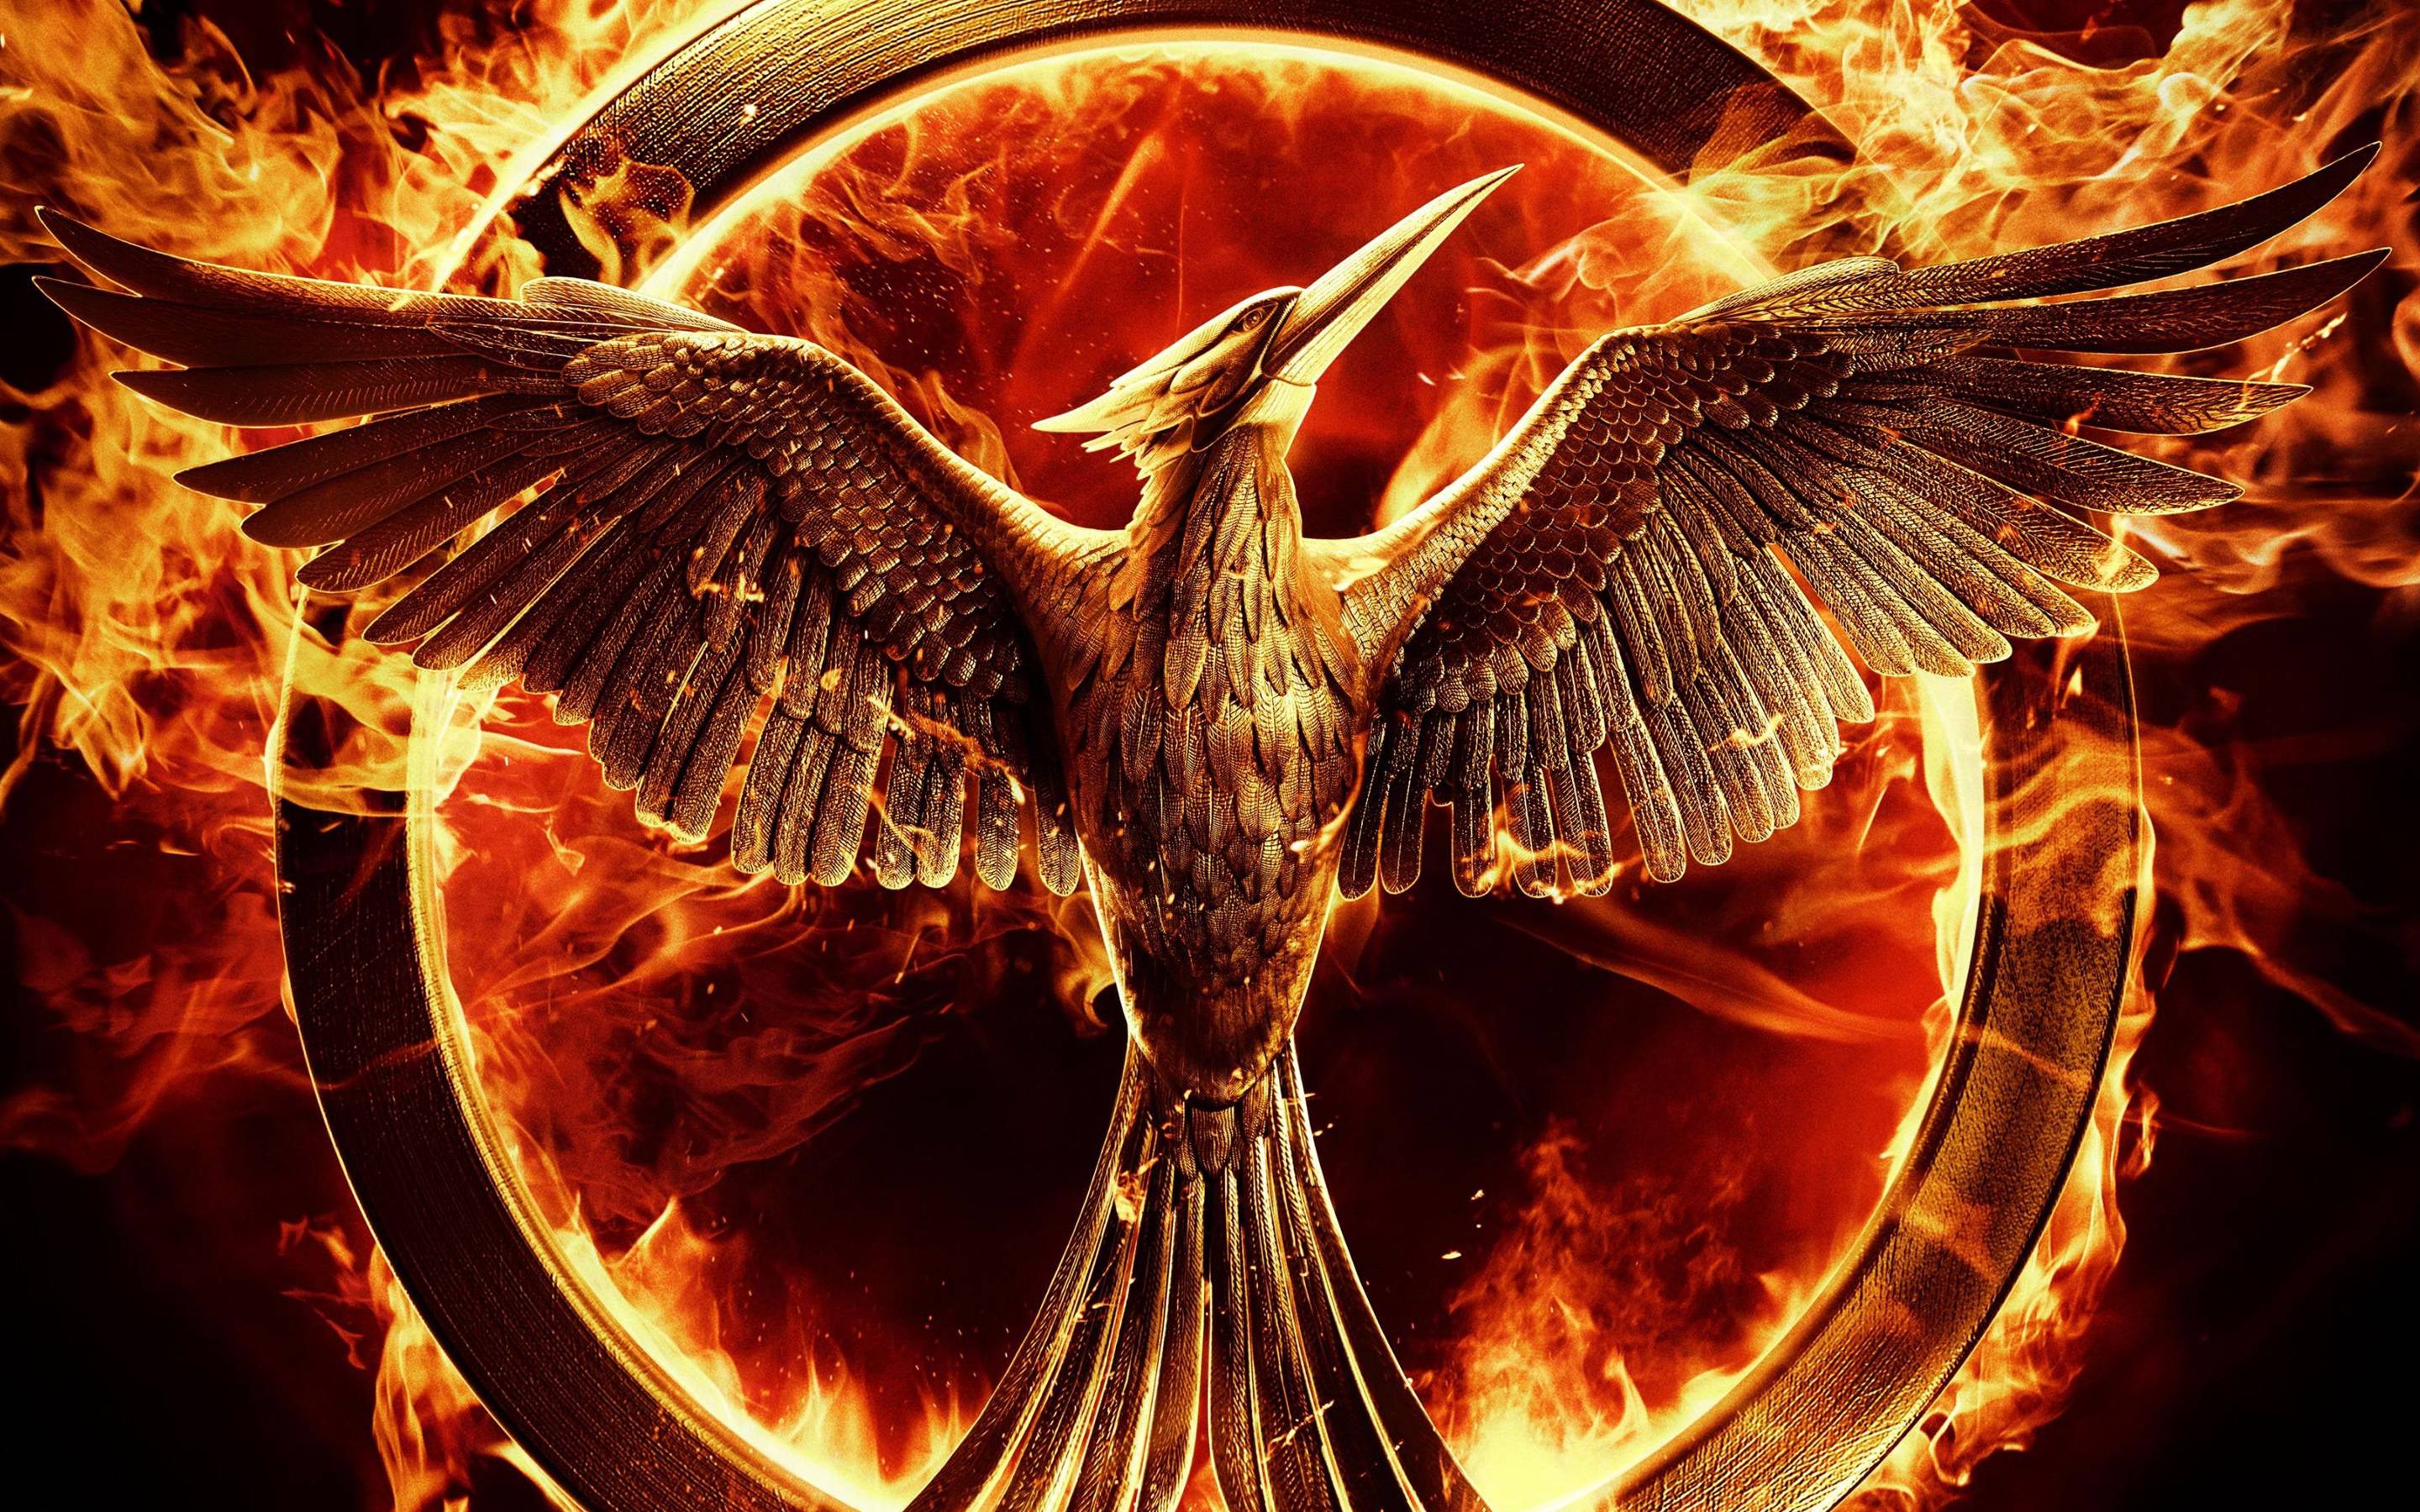 The Hunger Games Wallpaper 2880x1800 (893.3 KB)